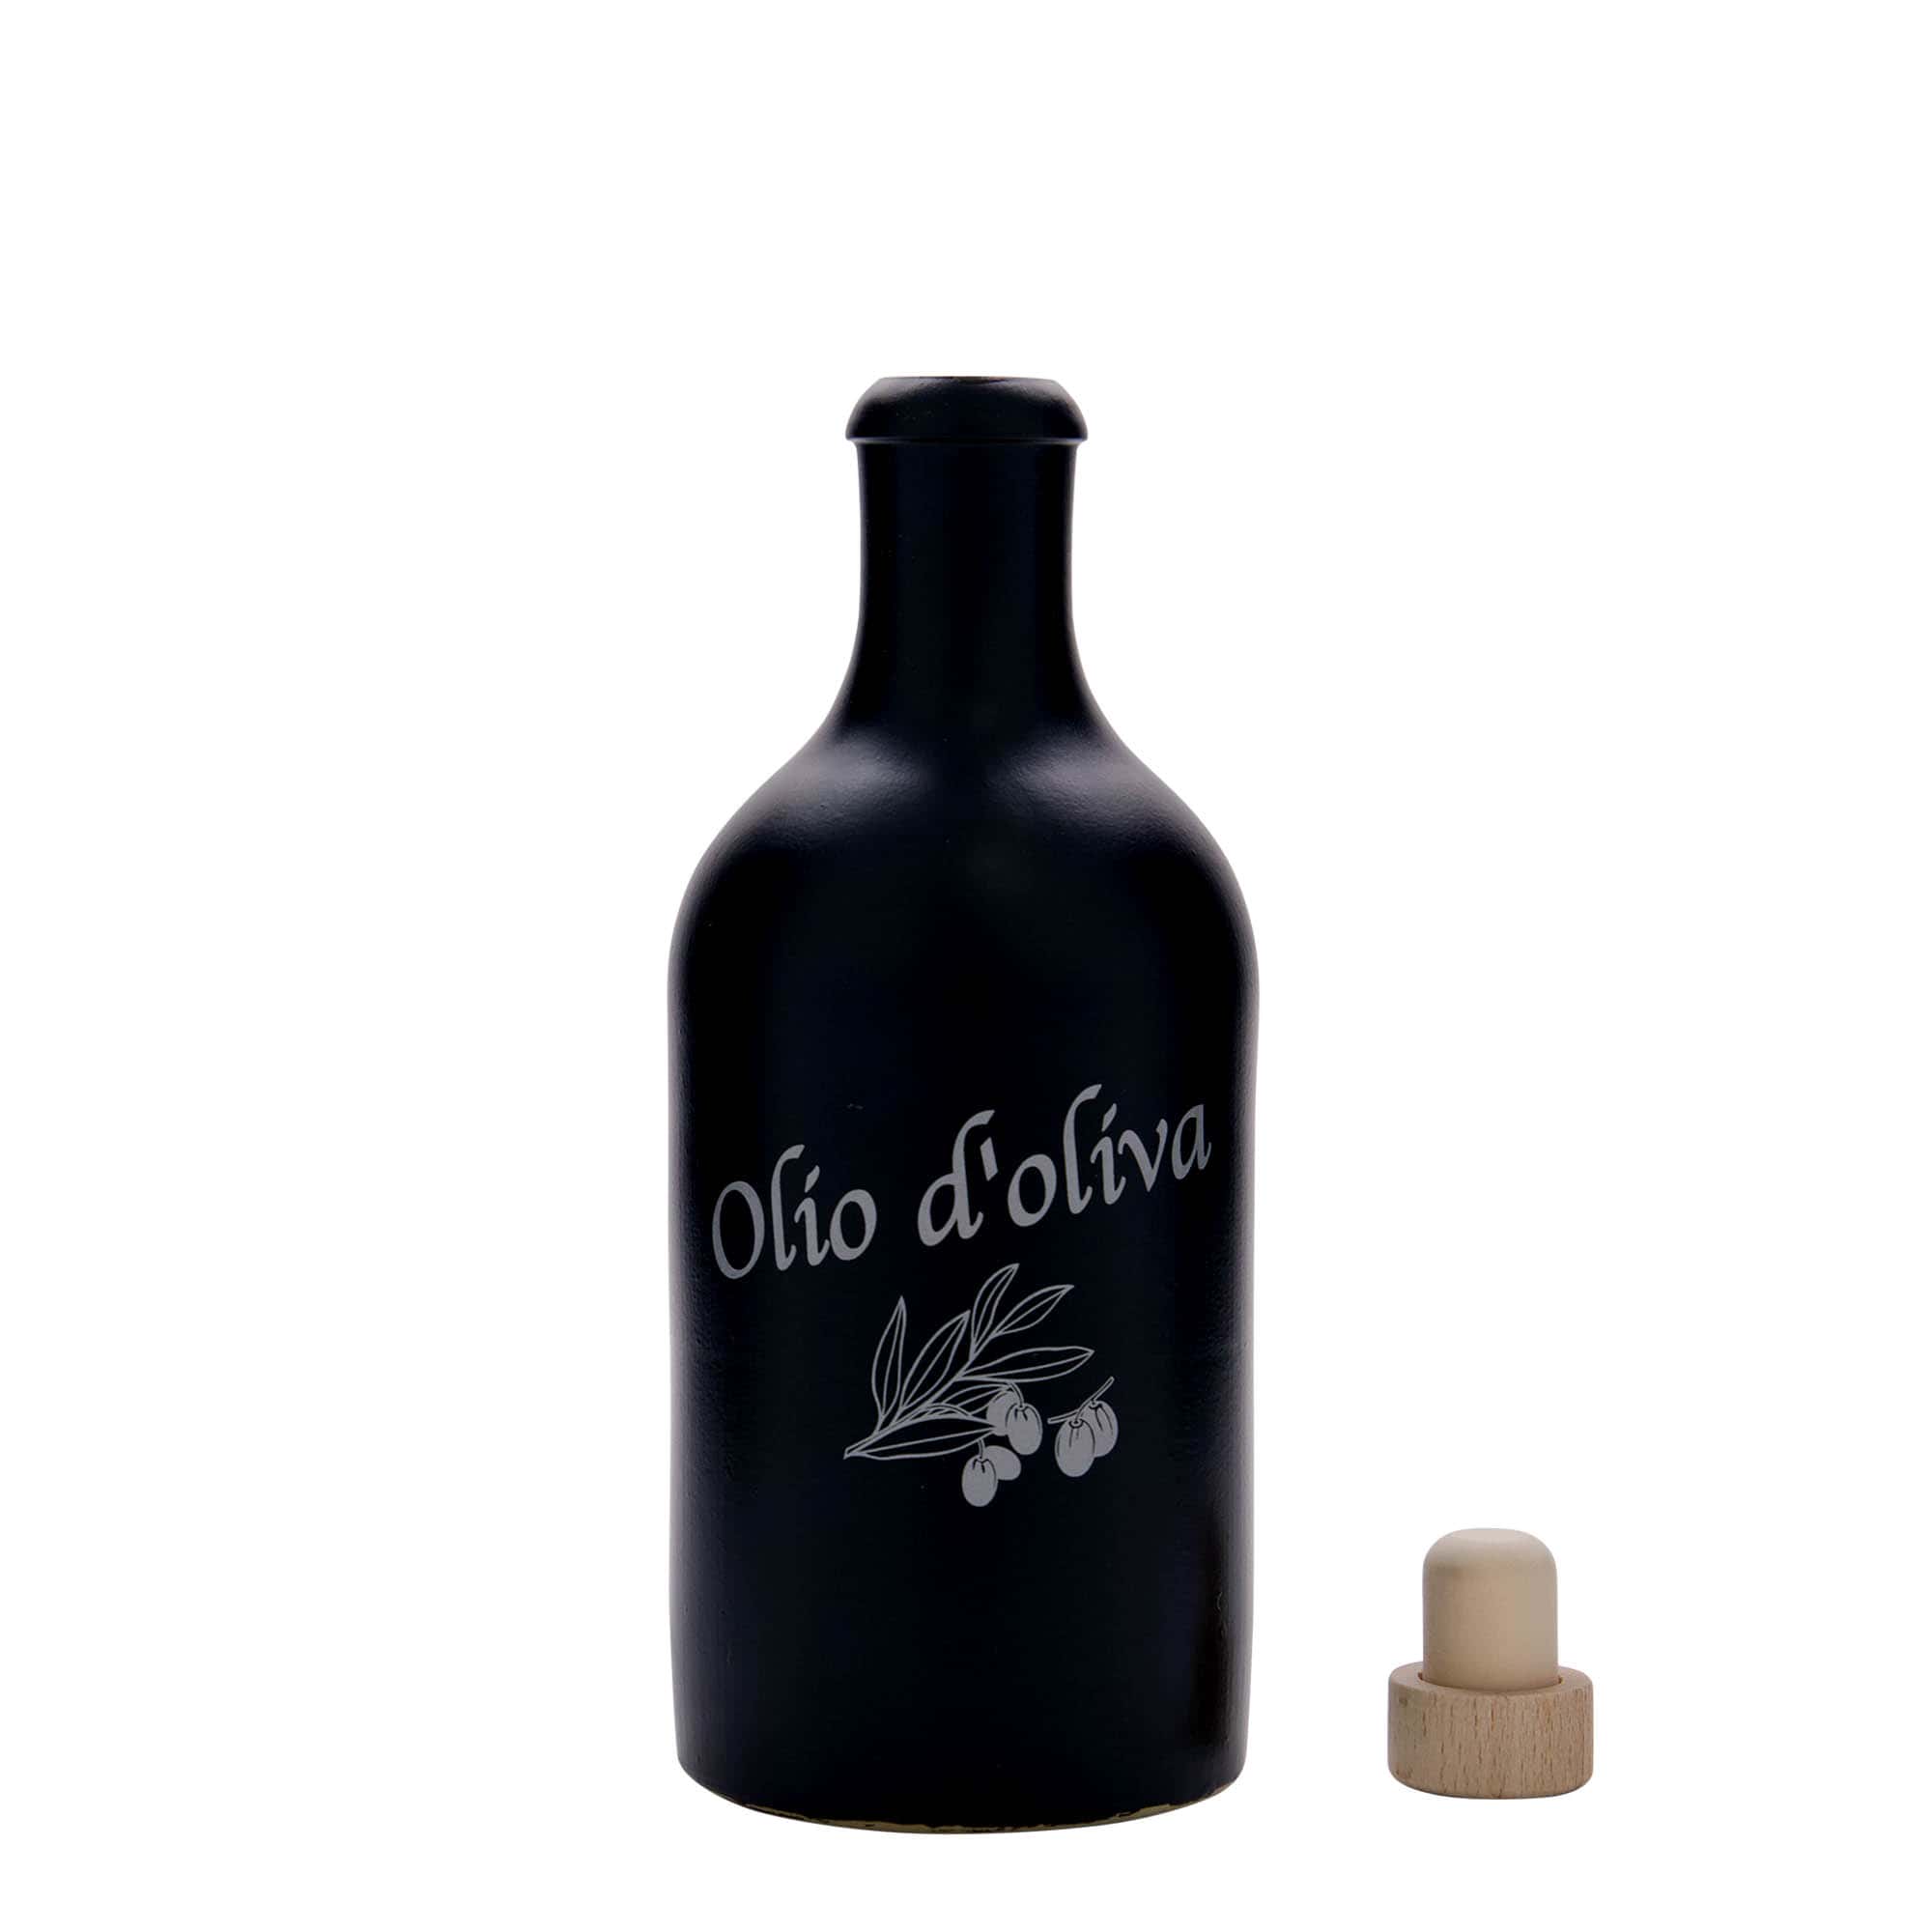 500 ml earthen jug, print: Olio d'Oliva, stoneware, black, closure: cork